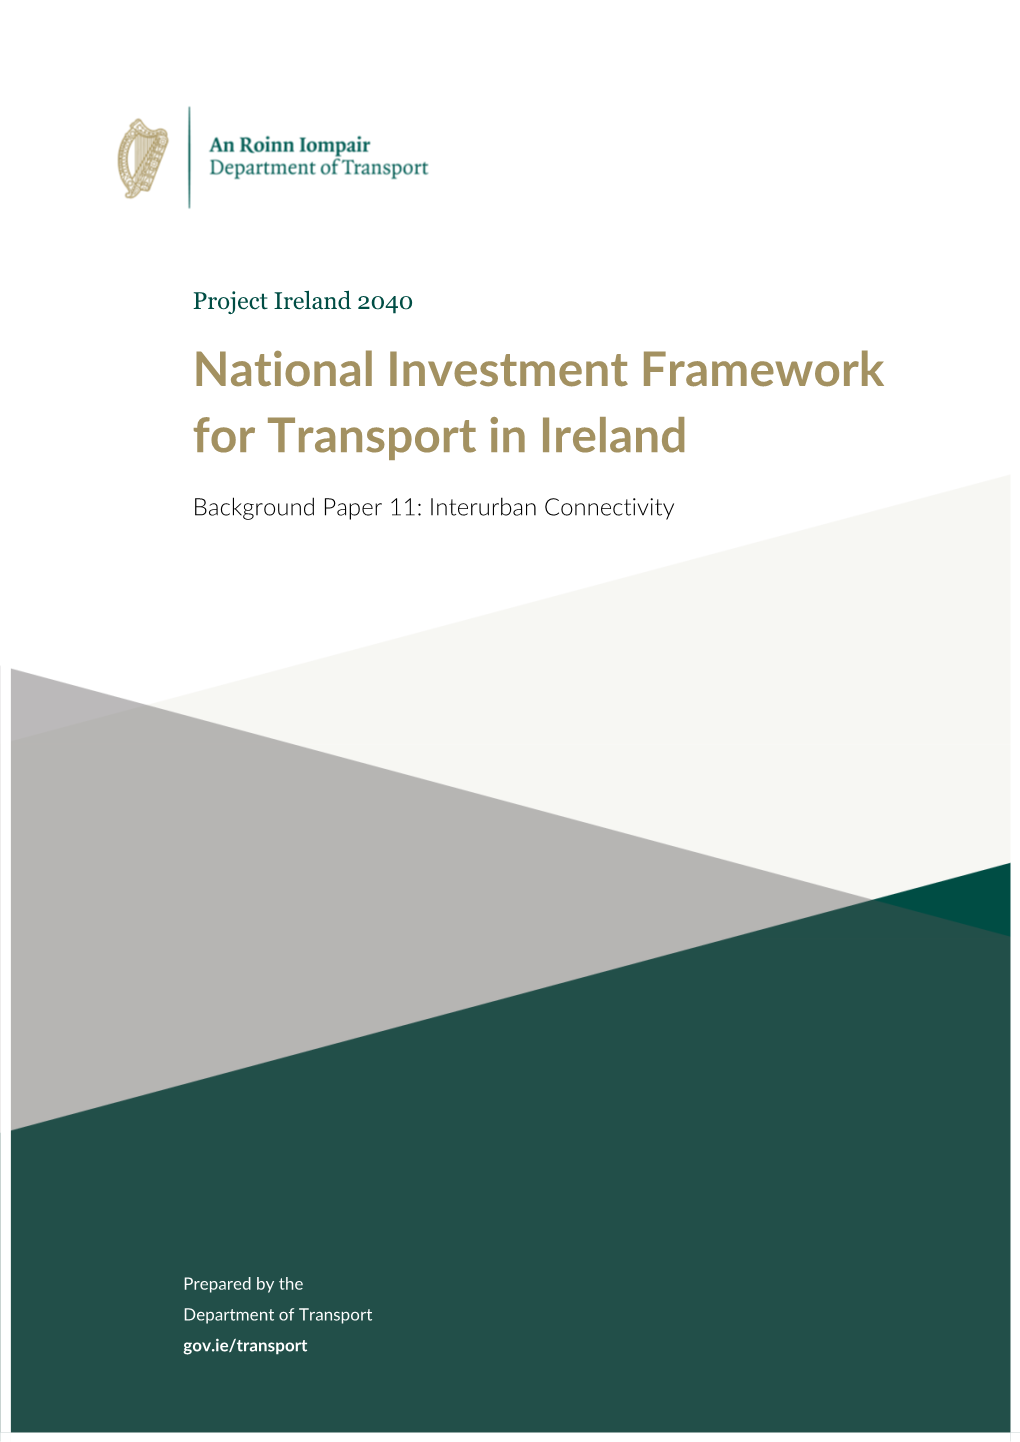 National Investment Framework for Transport in Ireland